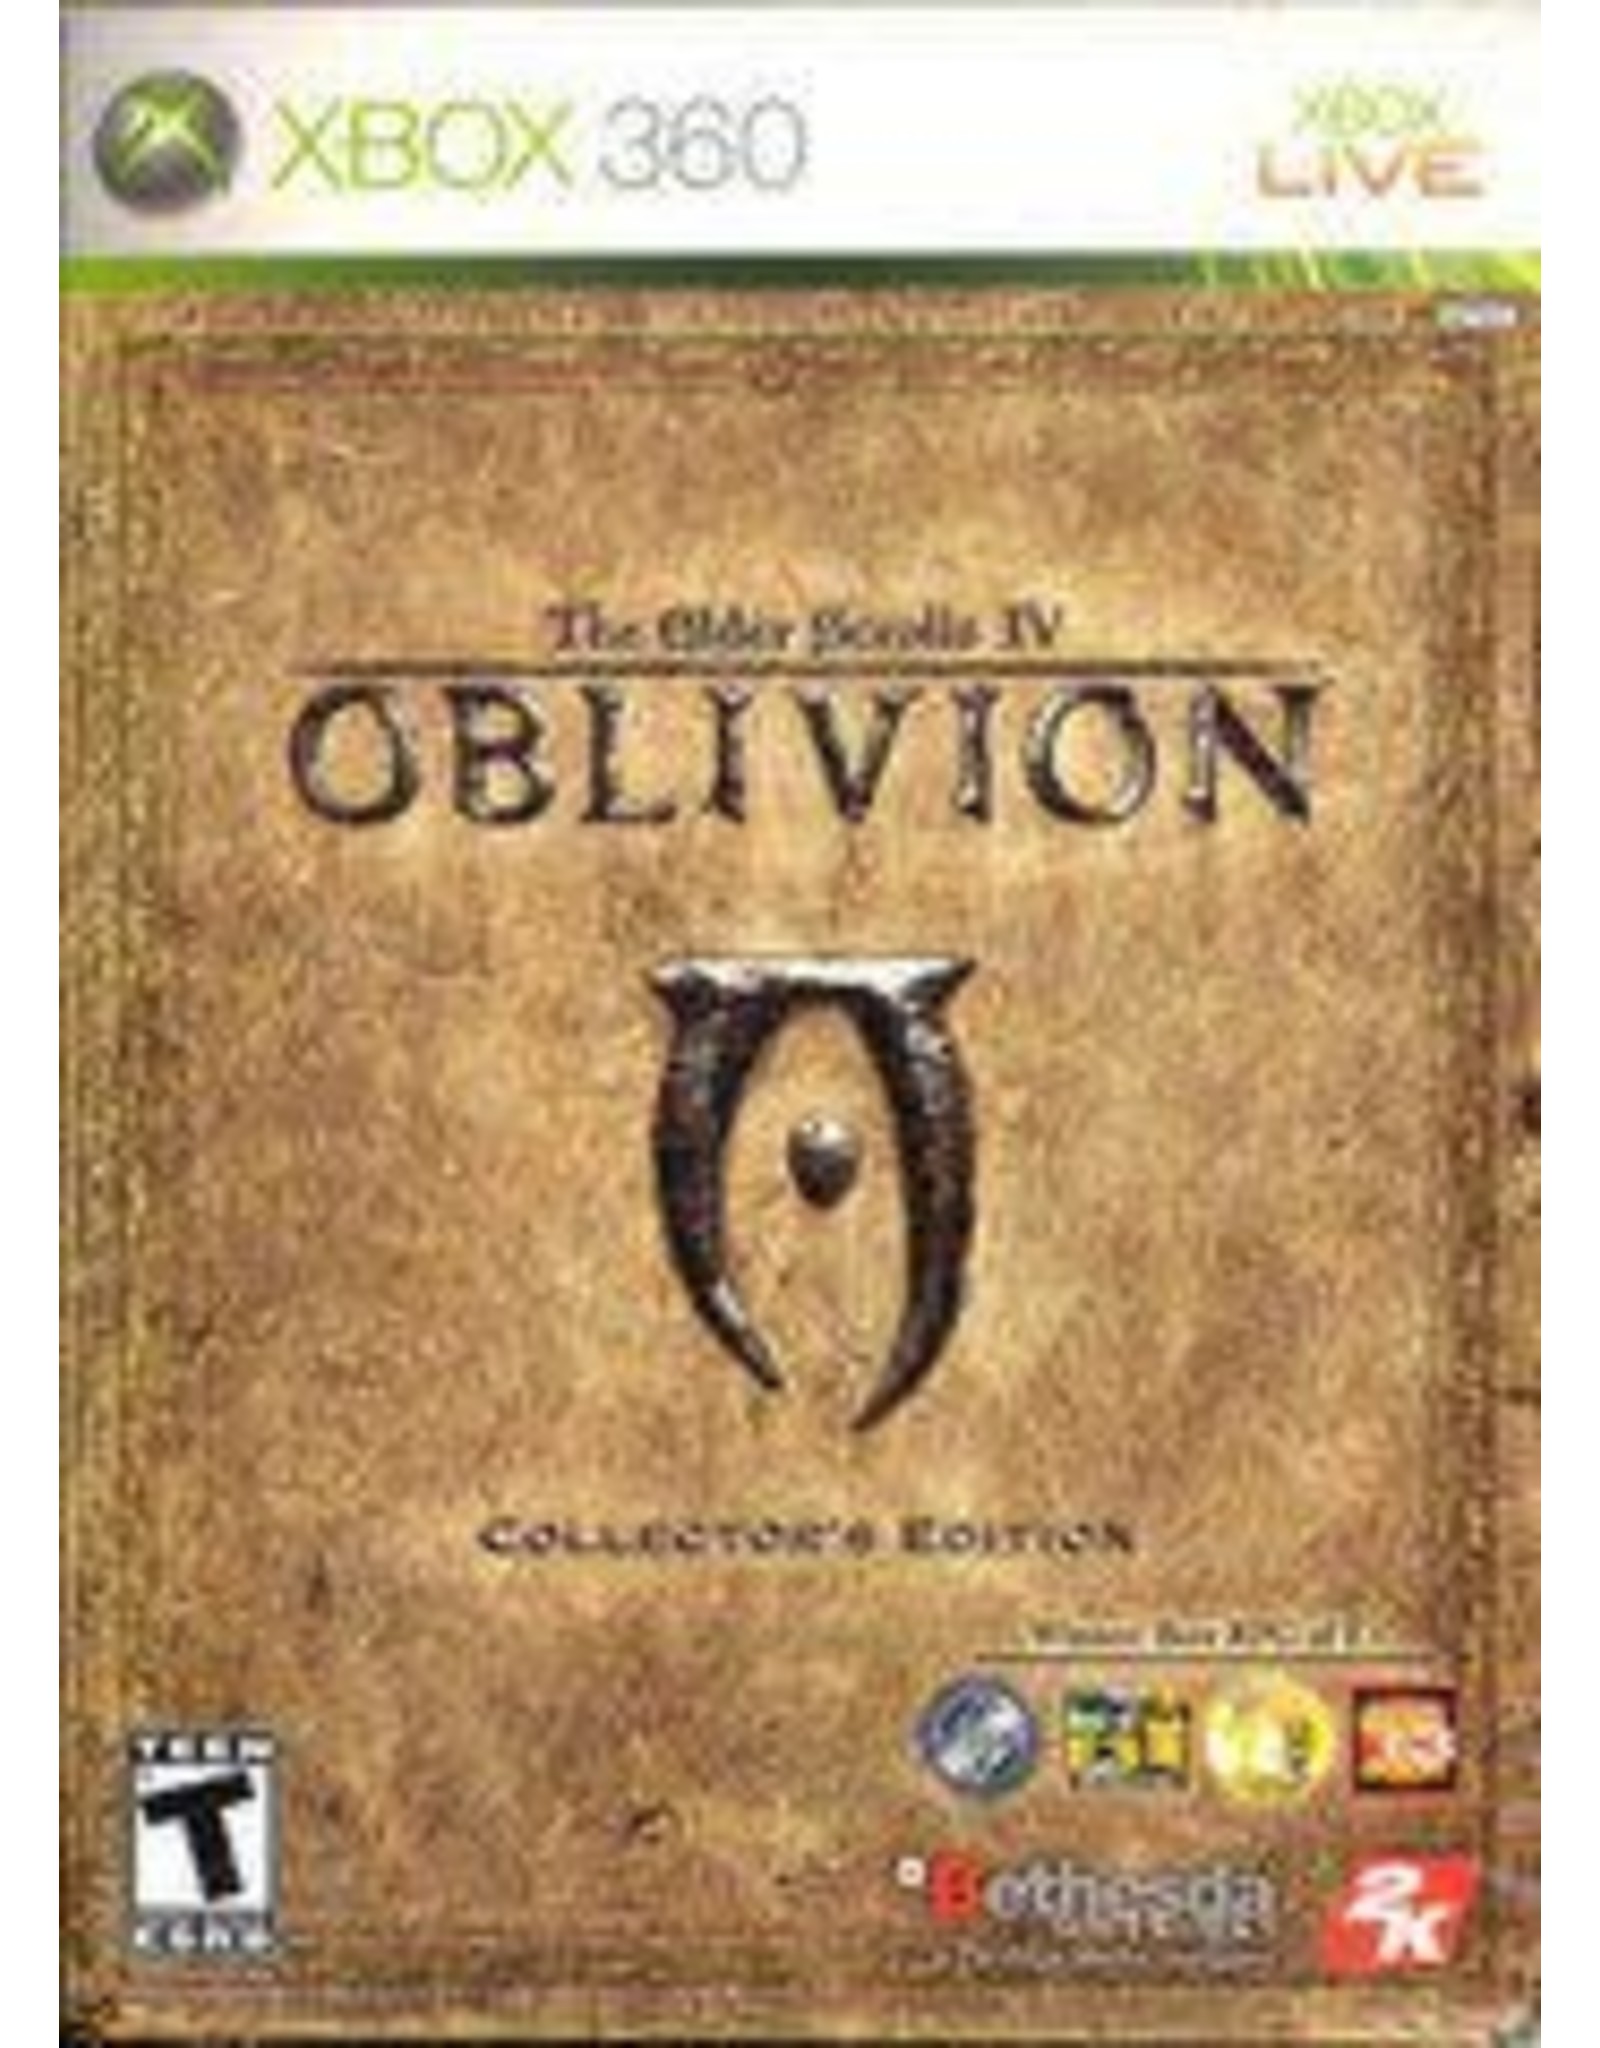 Xbox 360 Oblivion, Elder Scrolls IV Collector's Edition (CiB, No Coin, Damaged Outer Box)